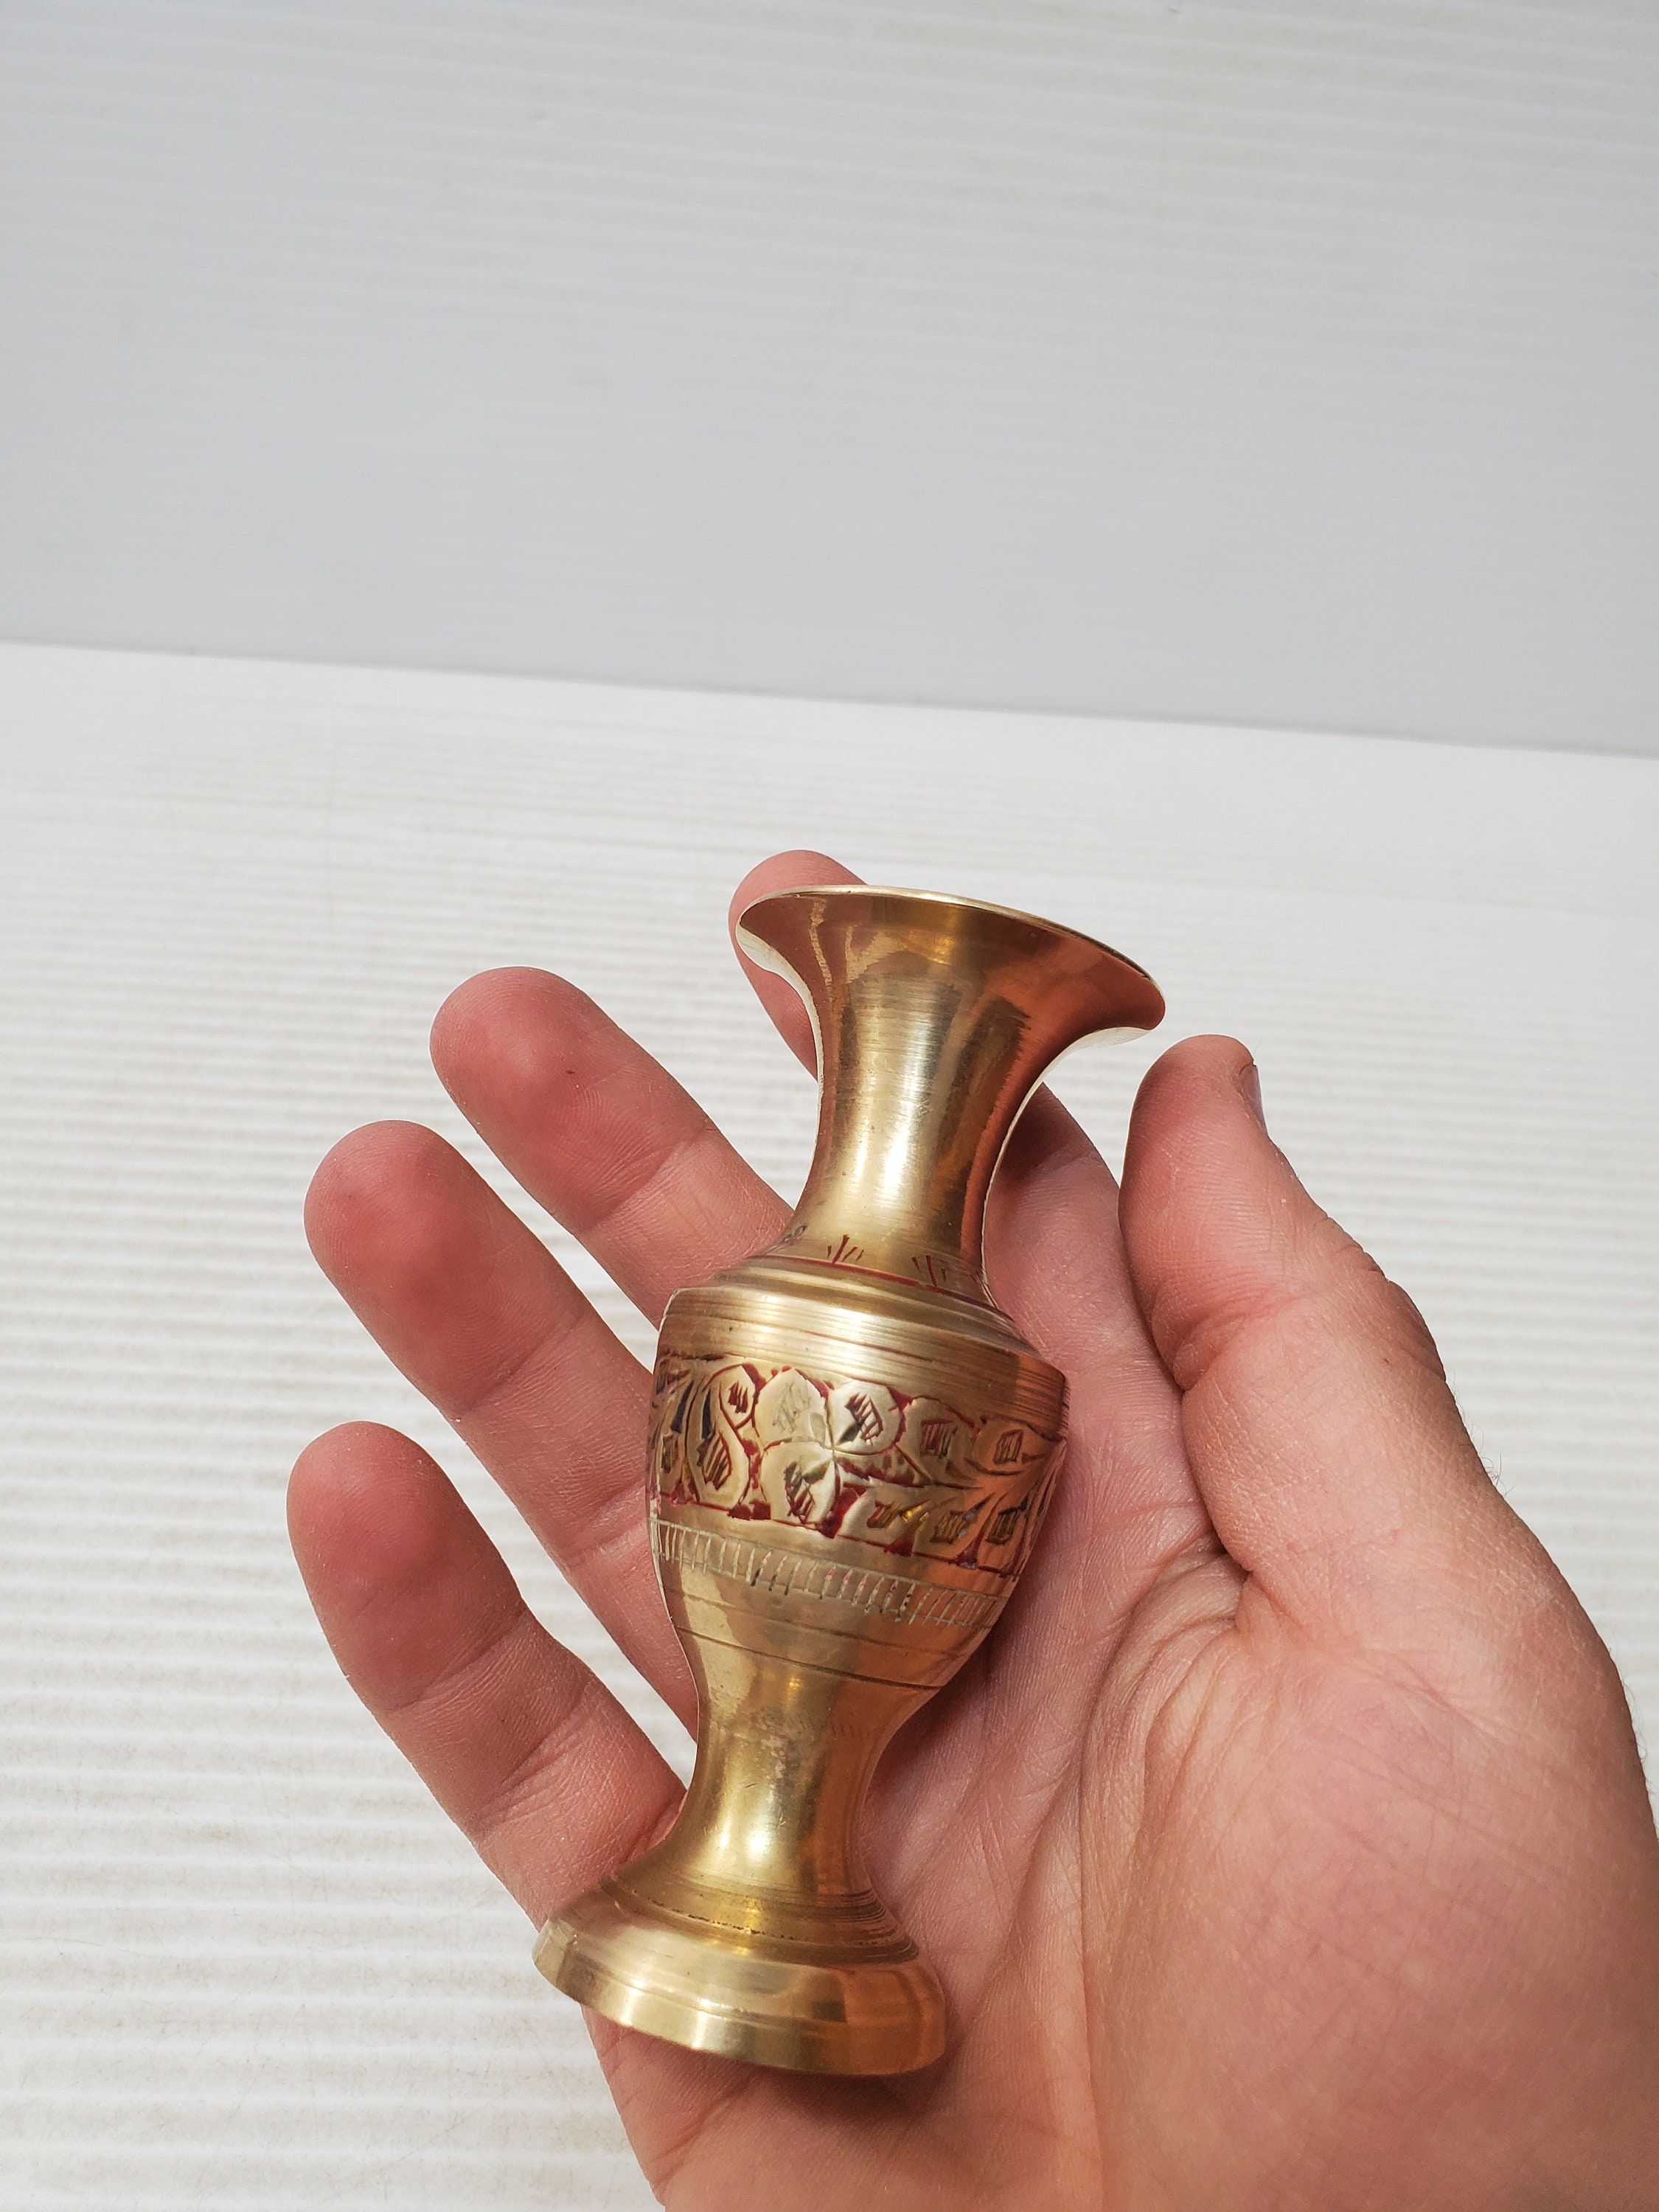 Vintage Brass Vase, Small Brass Vase, Collectible Brass Vase, Antique  Flower Vase, Vintage Decor, Gift. -  Canada